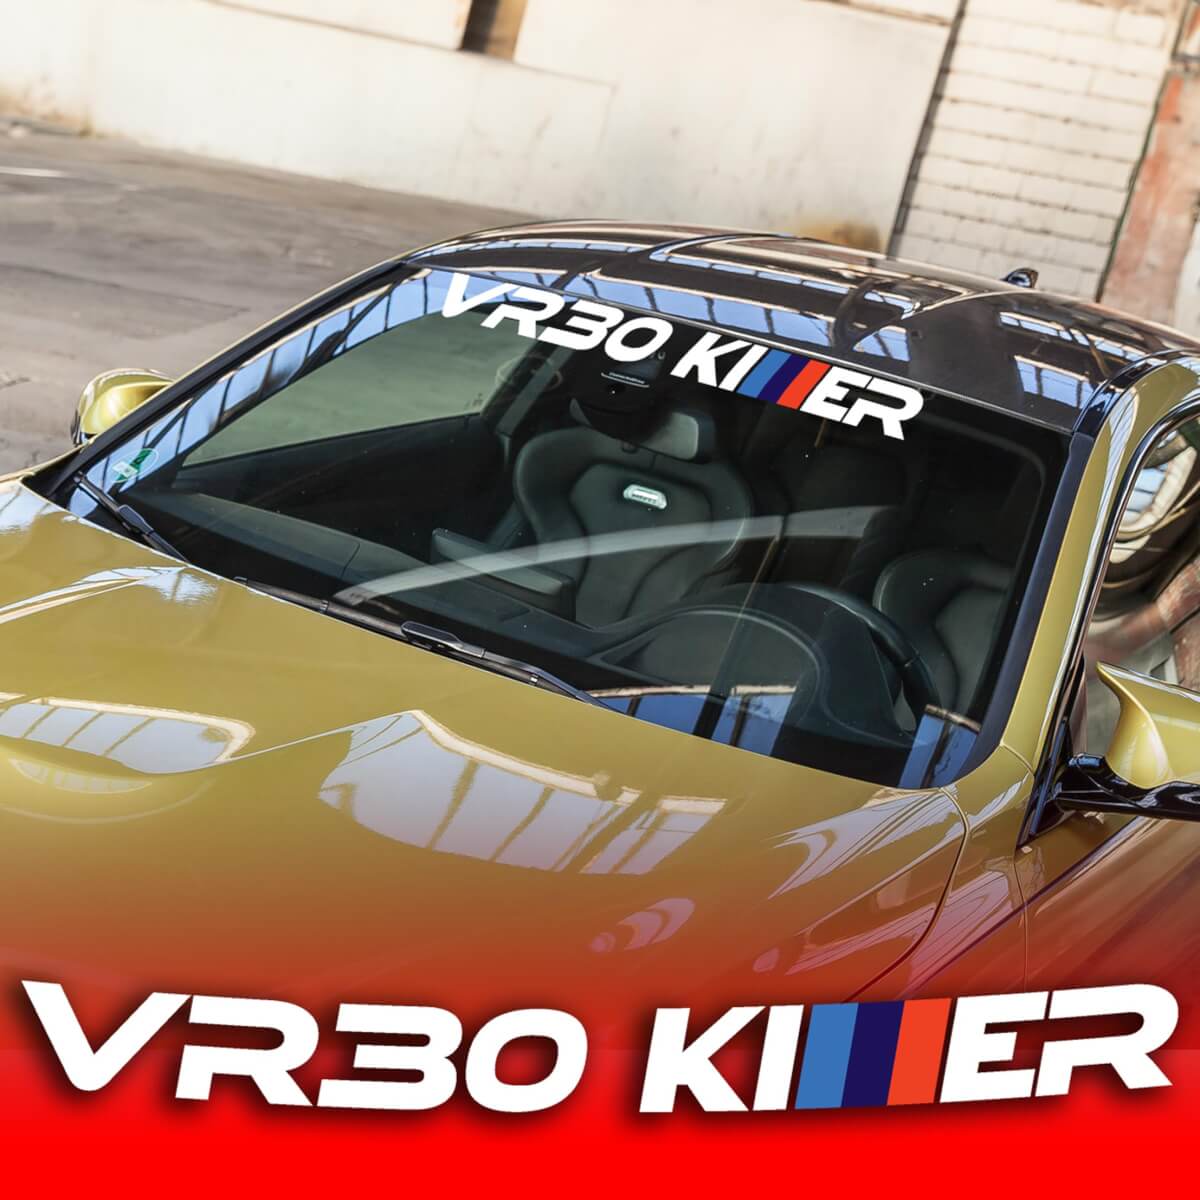 VR30 Killer BMW Fan Funny Windshield banner vinyl decals stickers
